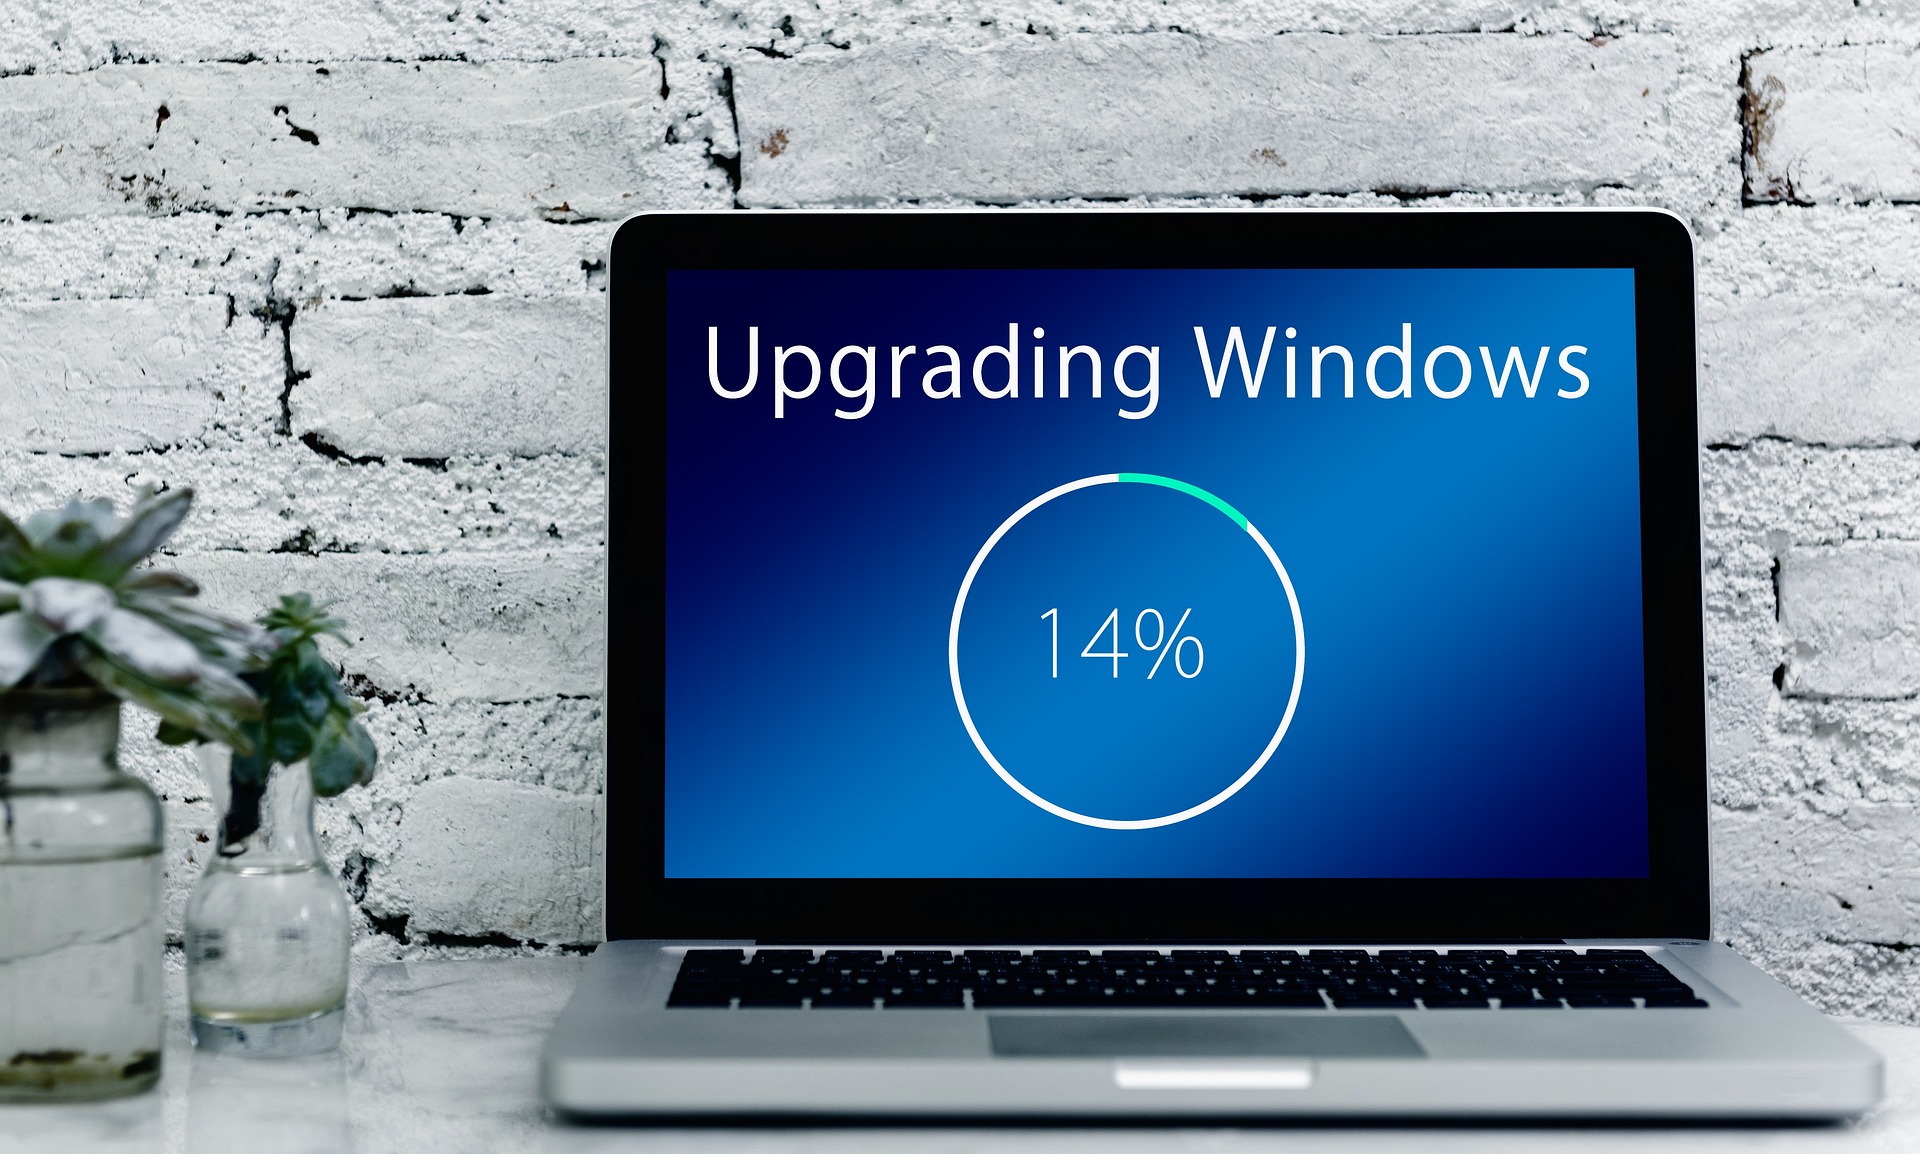 Windows Laptop updating windows